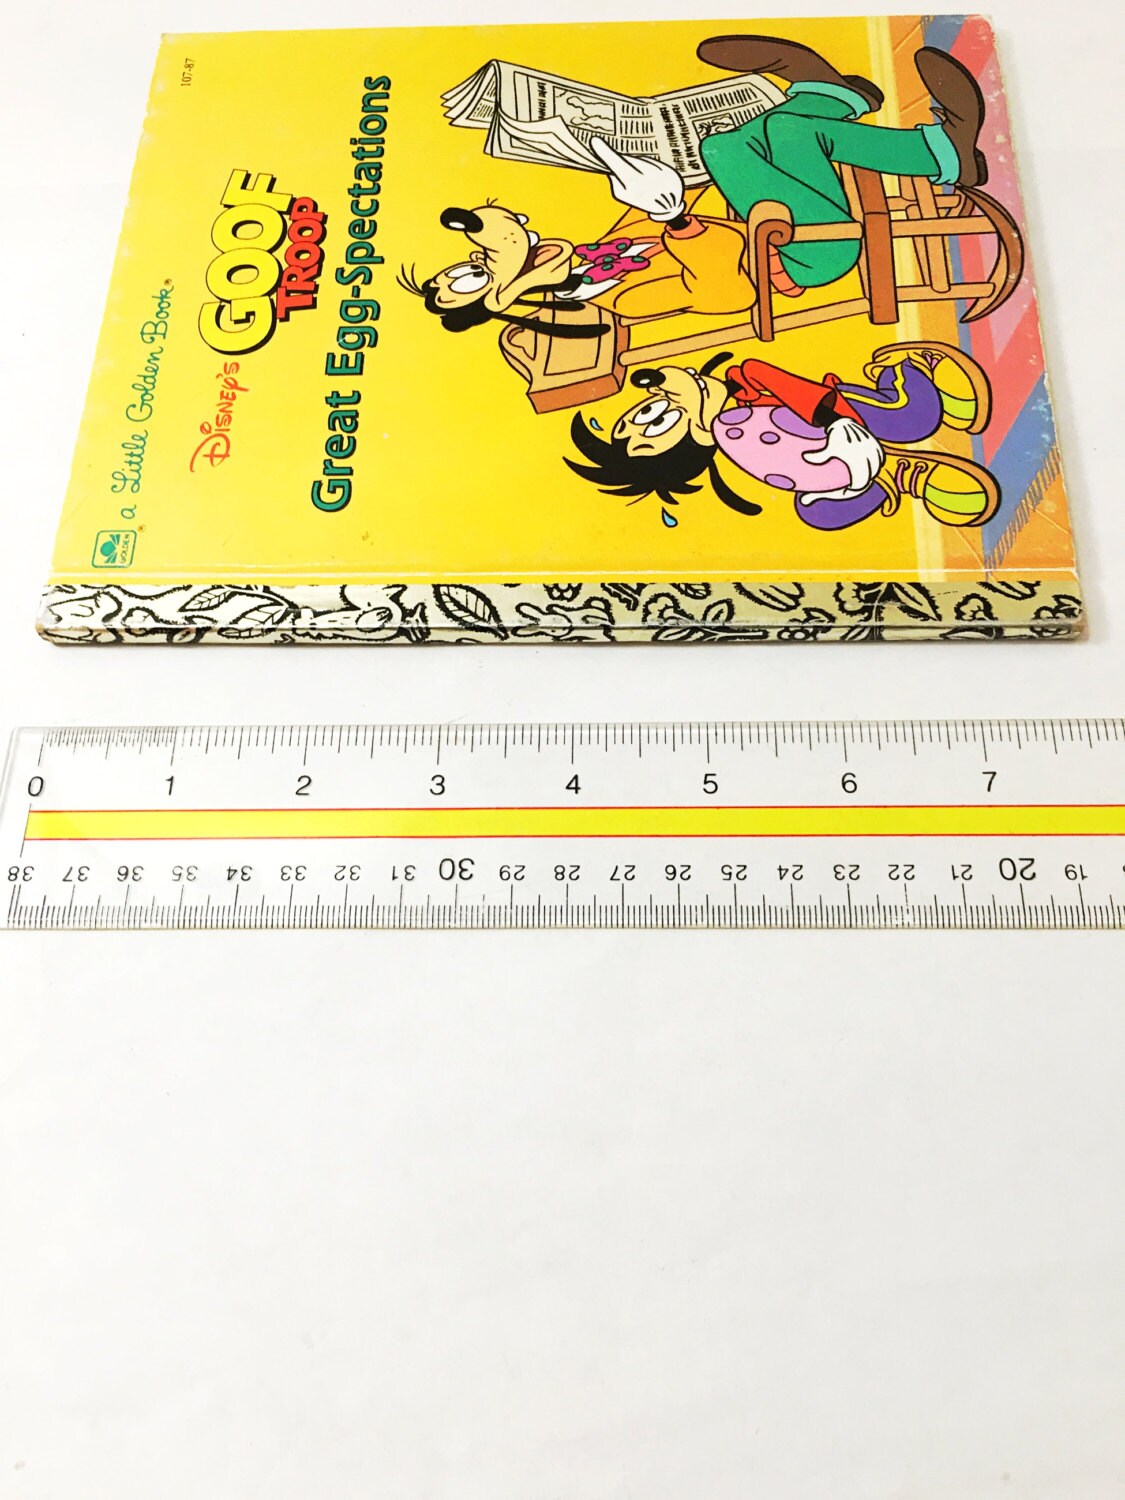 Little Golden Book. Walt Disney's Goof Troop. Great Egg-Spectacular. FIRST EDITION vintage children's book 107-87. Goofy book. Yellow decor